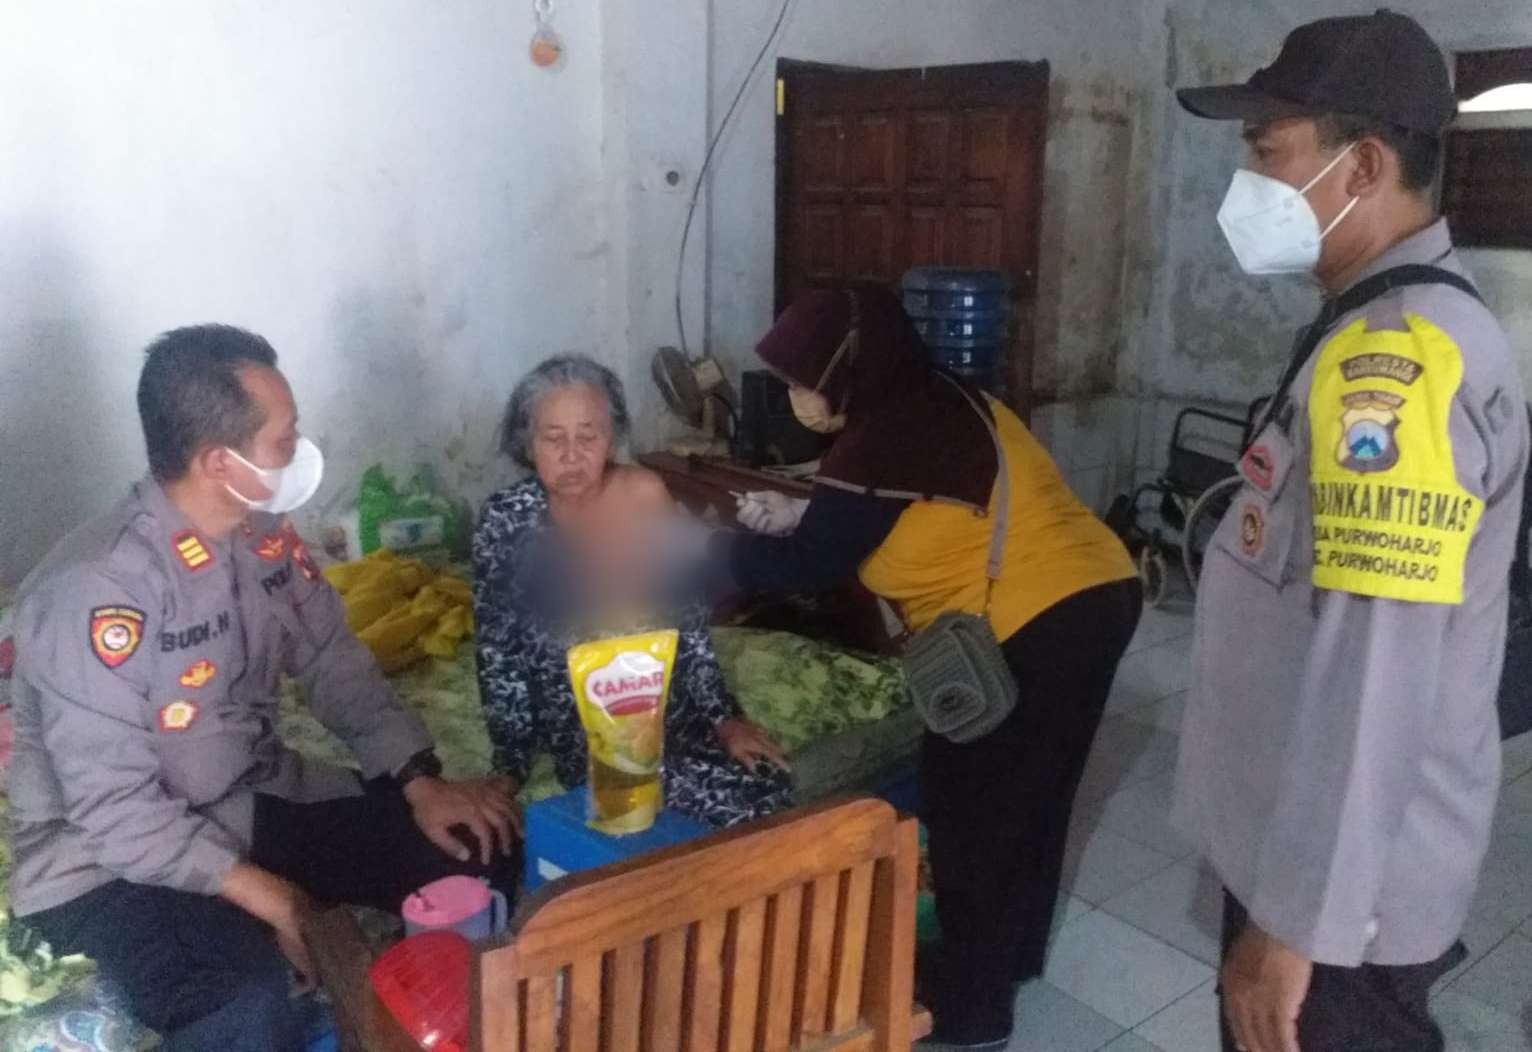 Petugas menyuntikkan vaksin covid-19 pada seorang lansia di Desa Purwoharjo, Banyuwangi, Jawa Timur. Hadiahnya satu liter minyak goreng. (Foto: Istimewa)